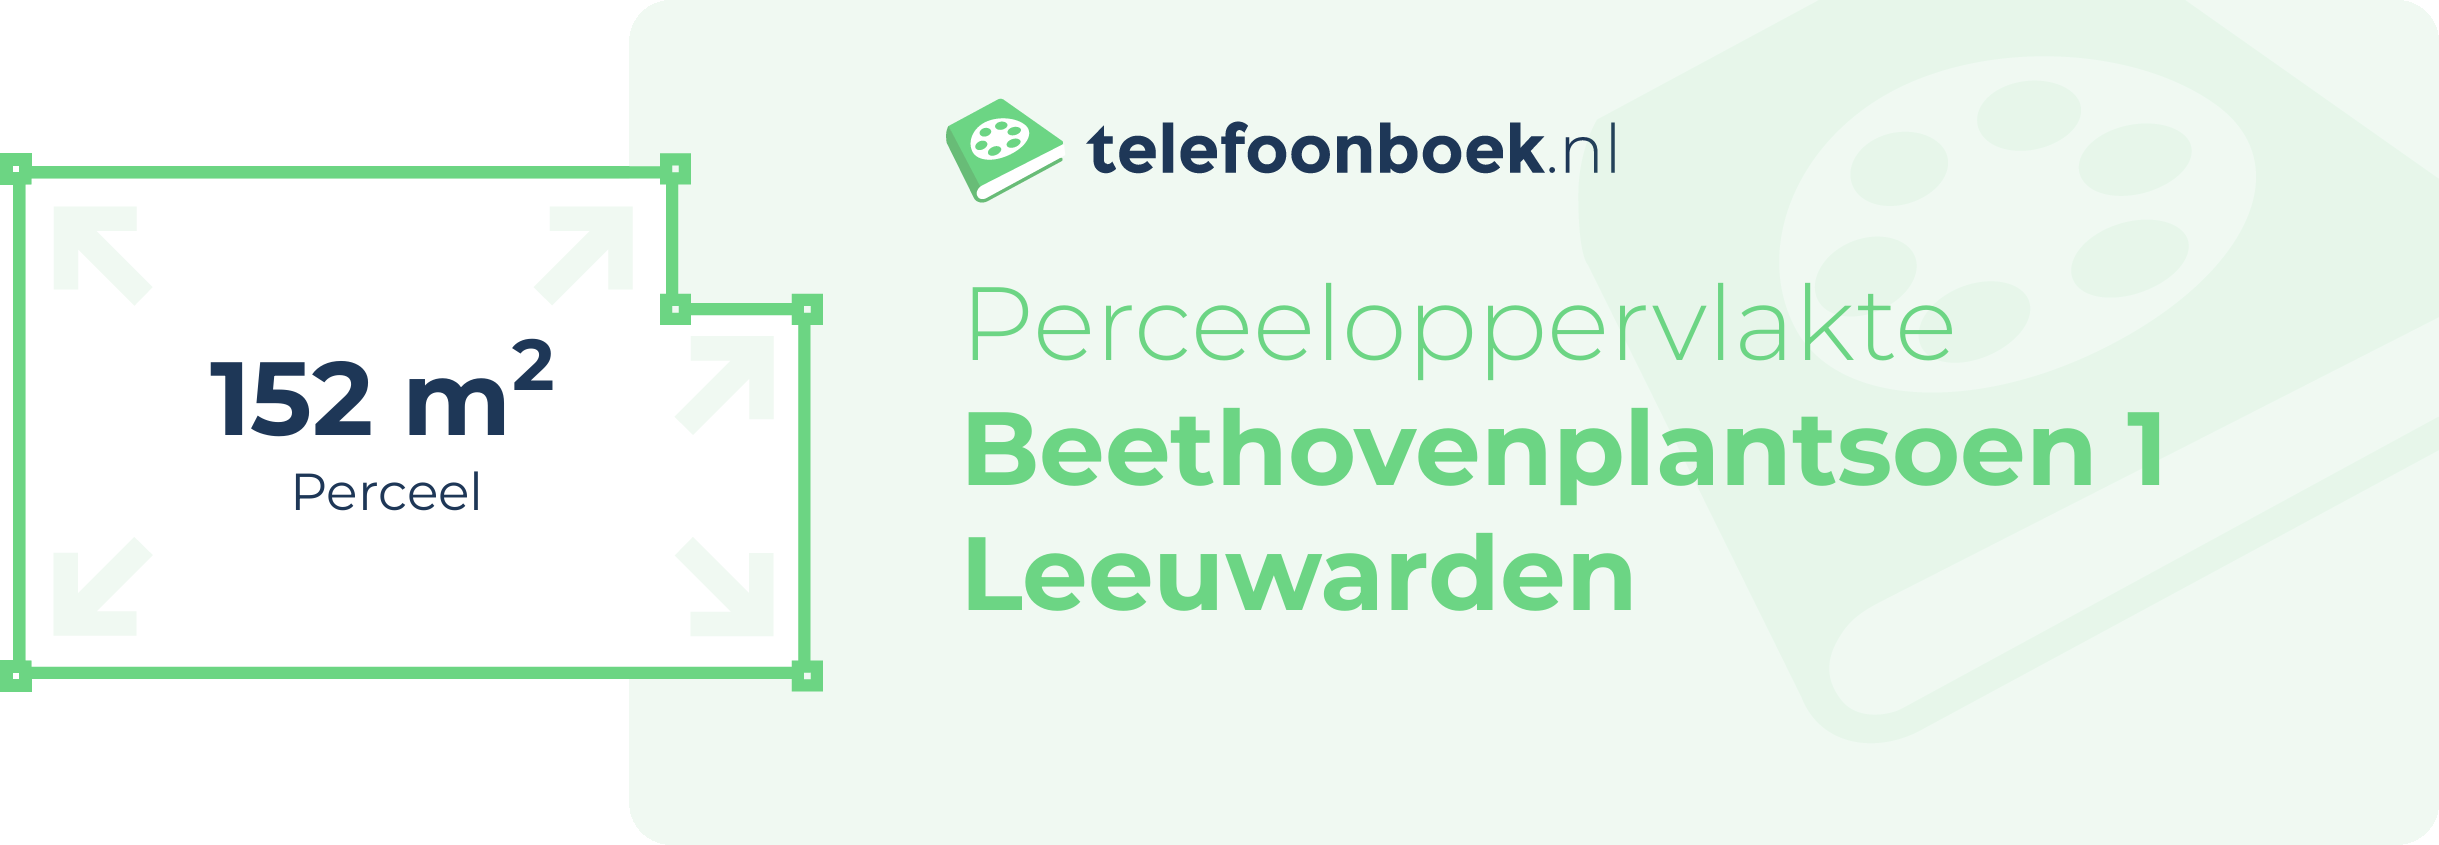 Perceeloppervlakte Beethovenplantsoen 1 Leeuwarden